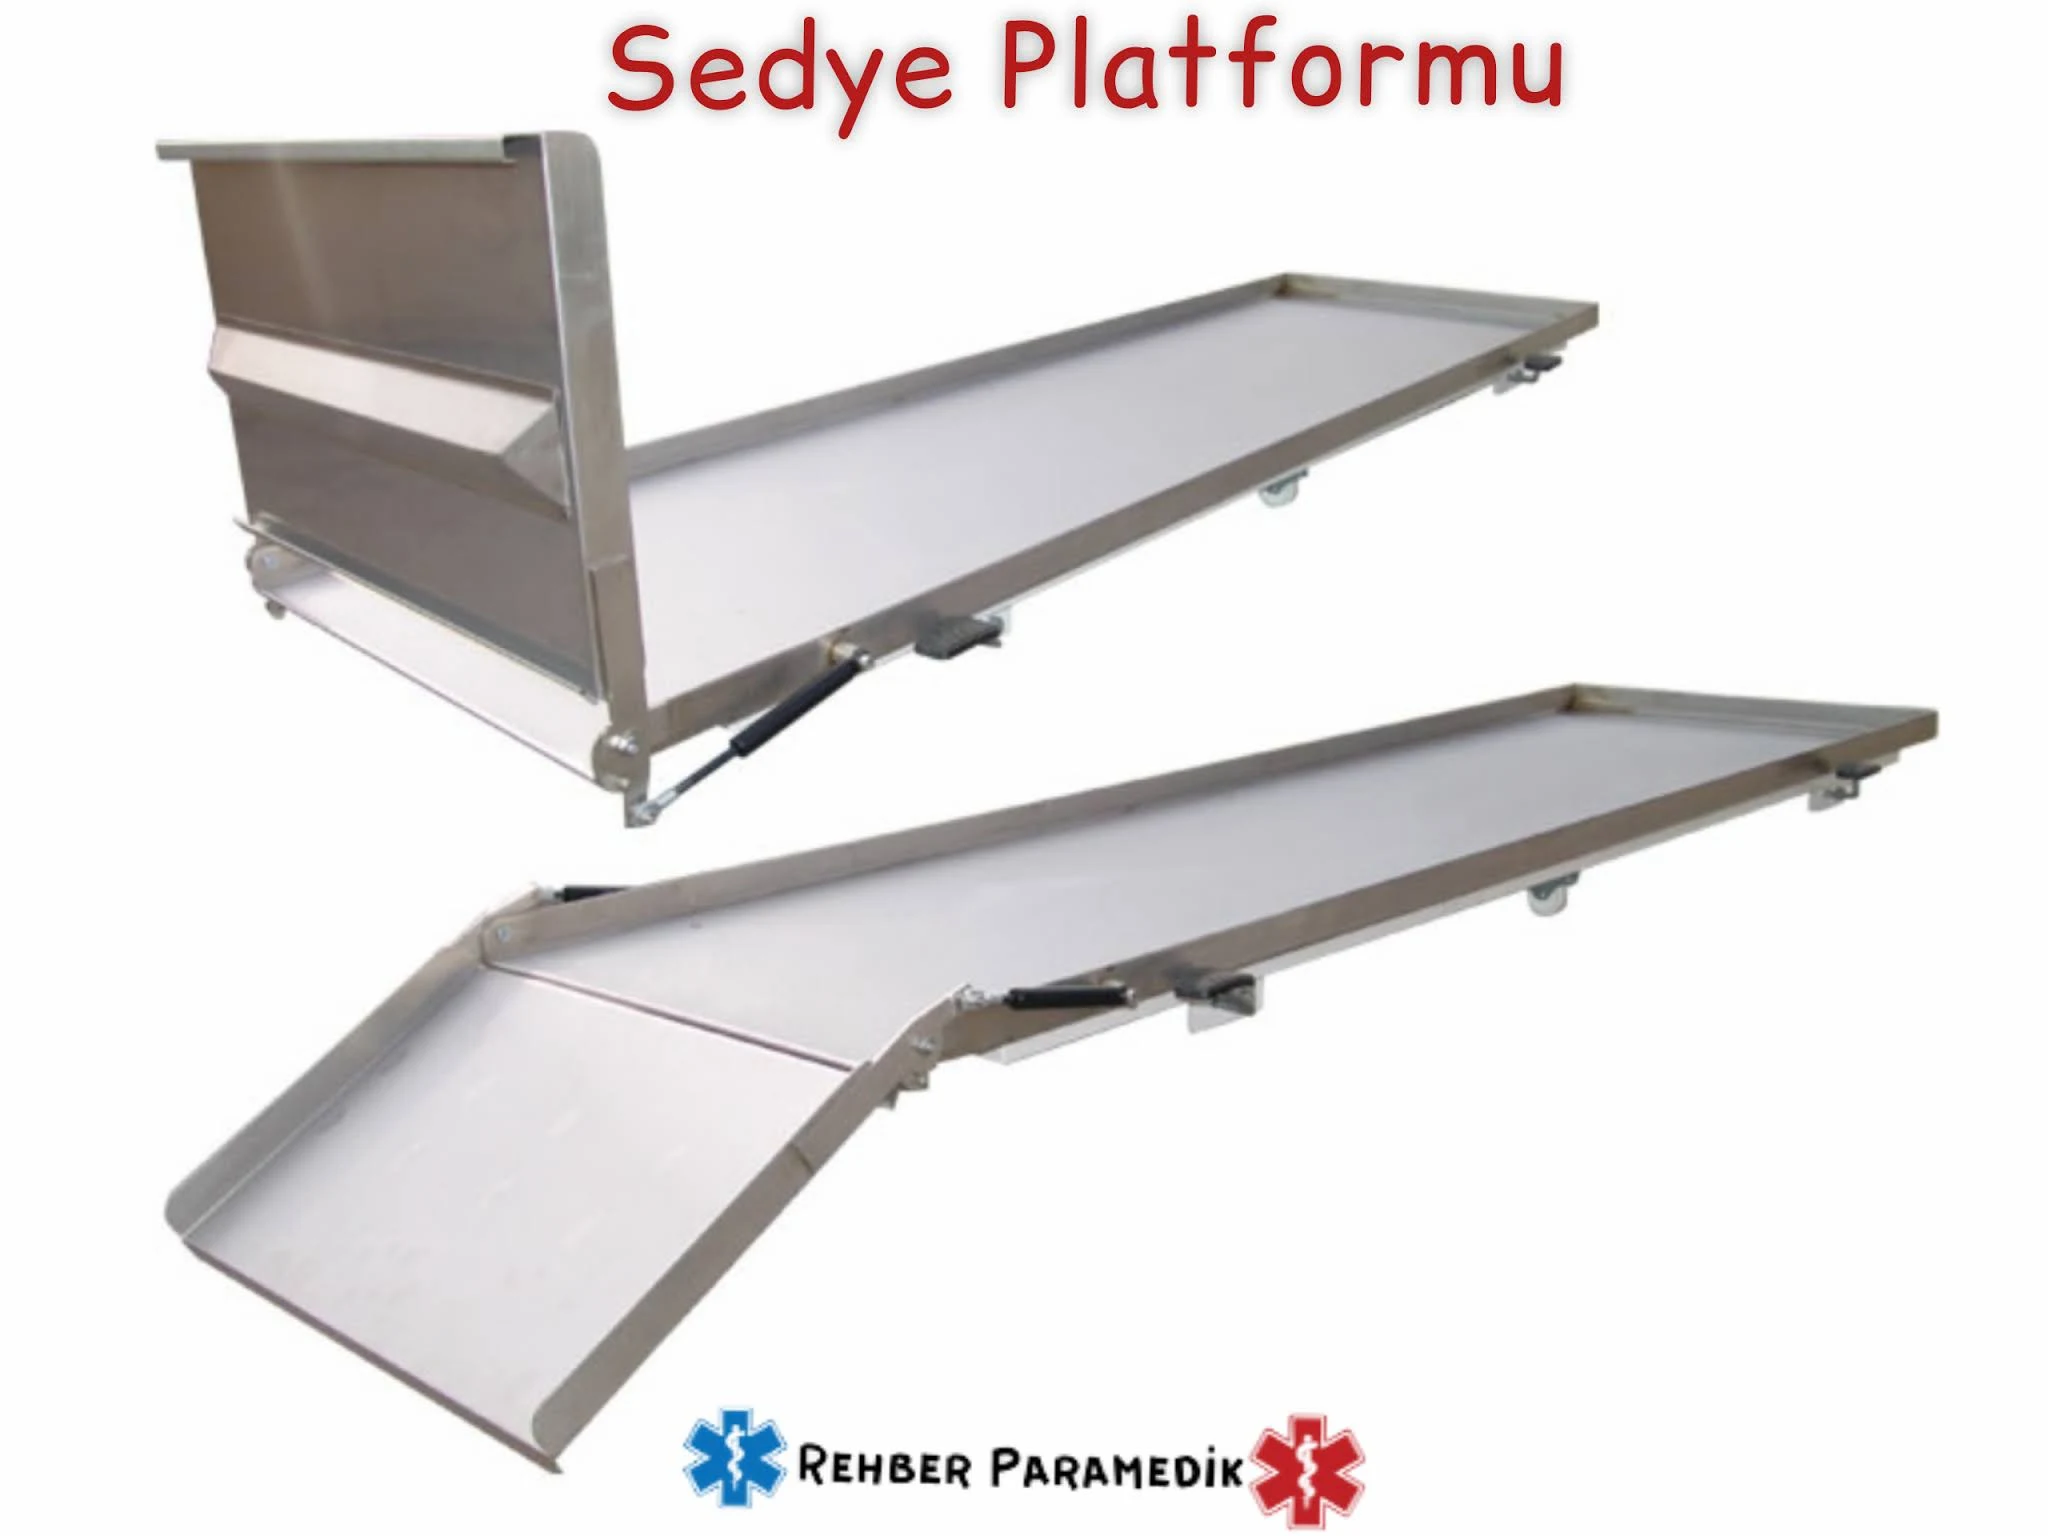 Sedye-platformu